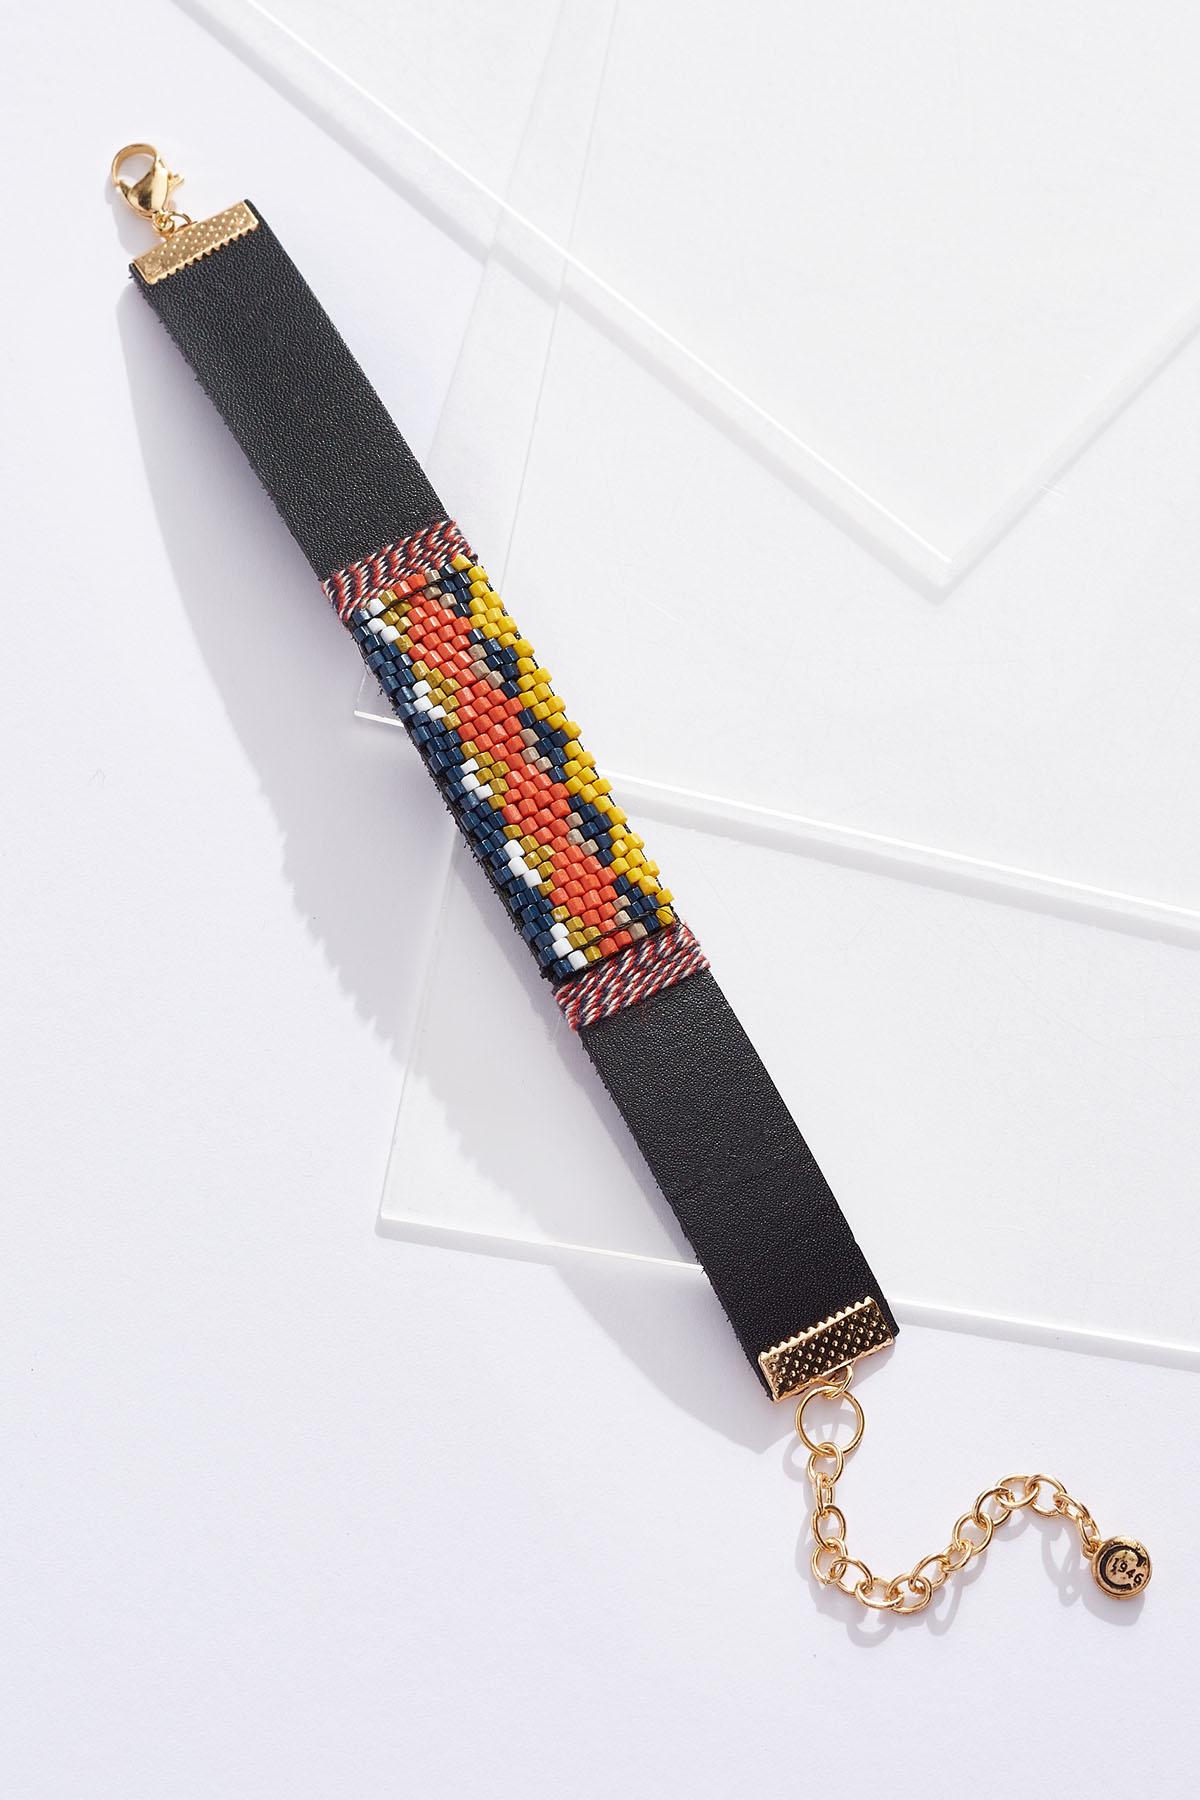 Aztec Seed Bead Bracelet